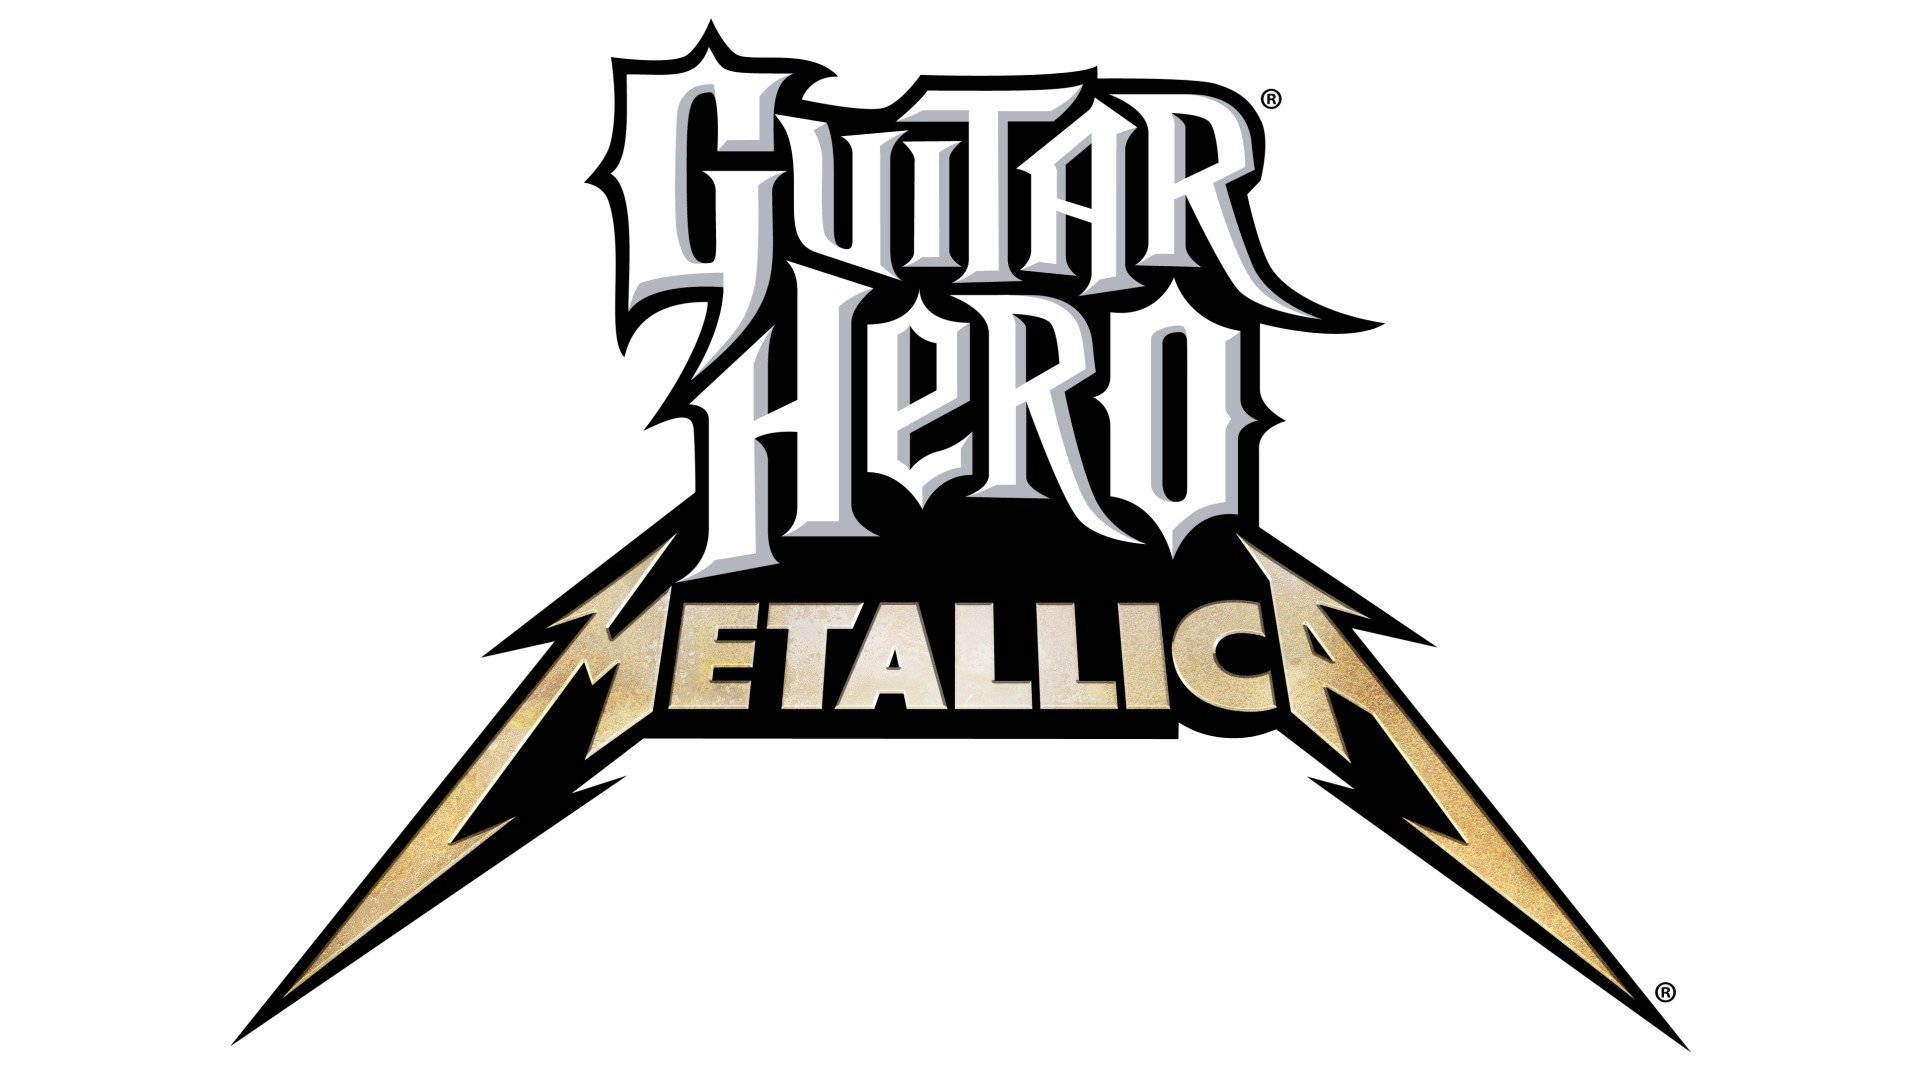 Imágenes De Guitar Hero